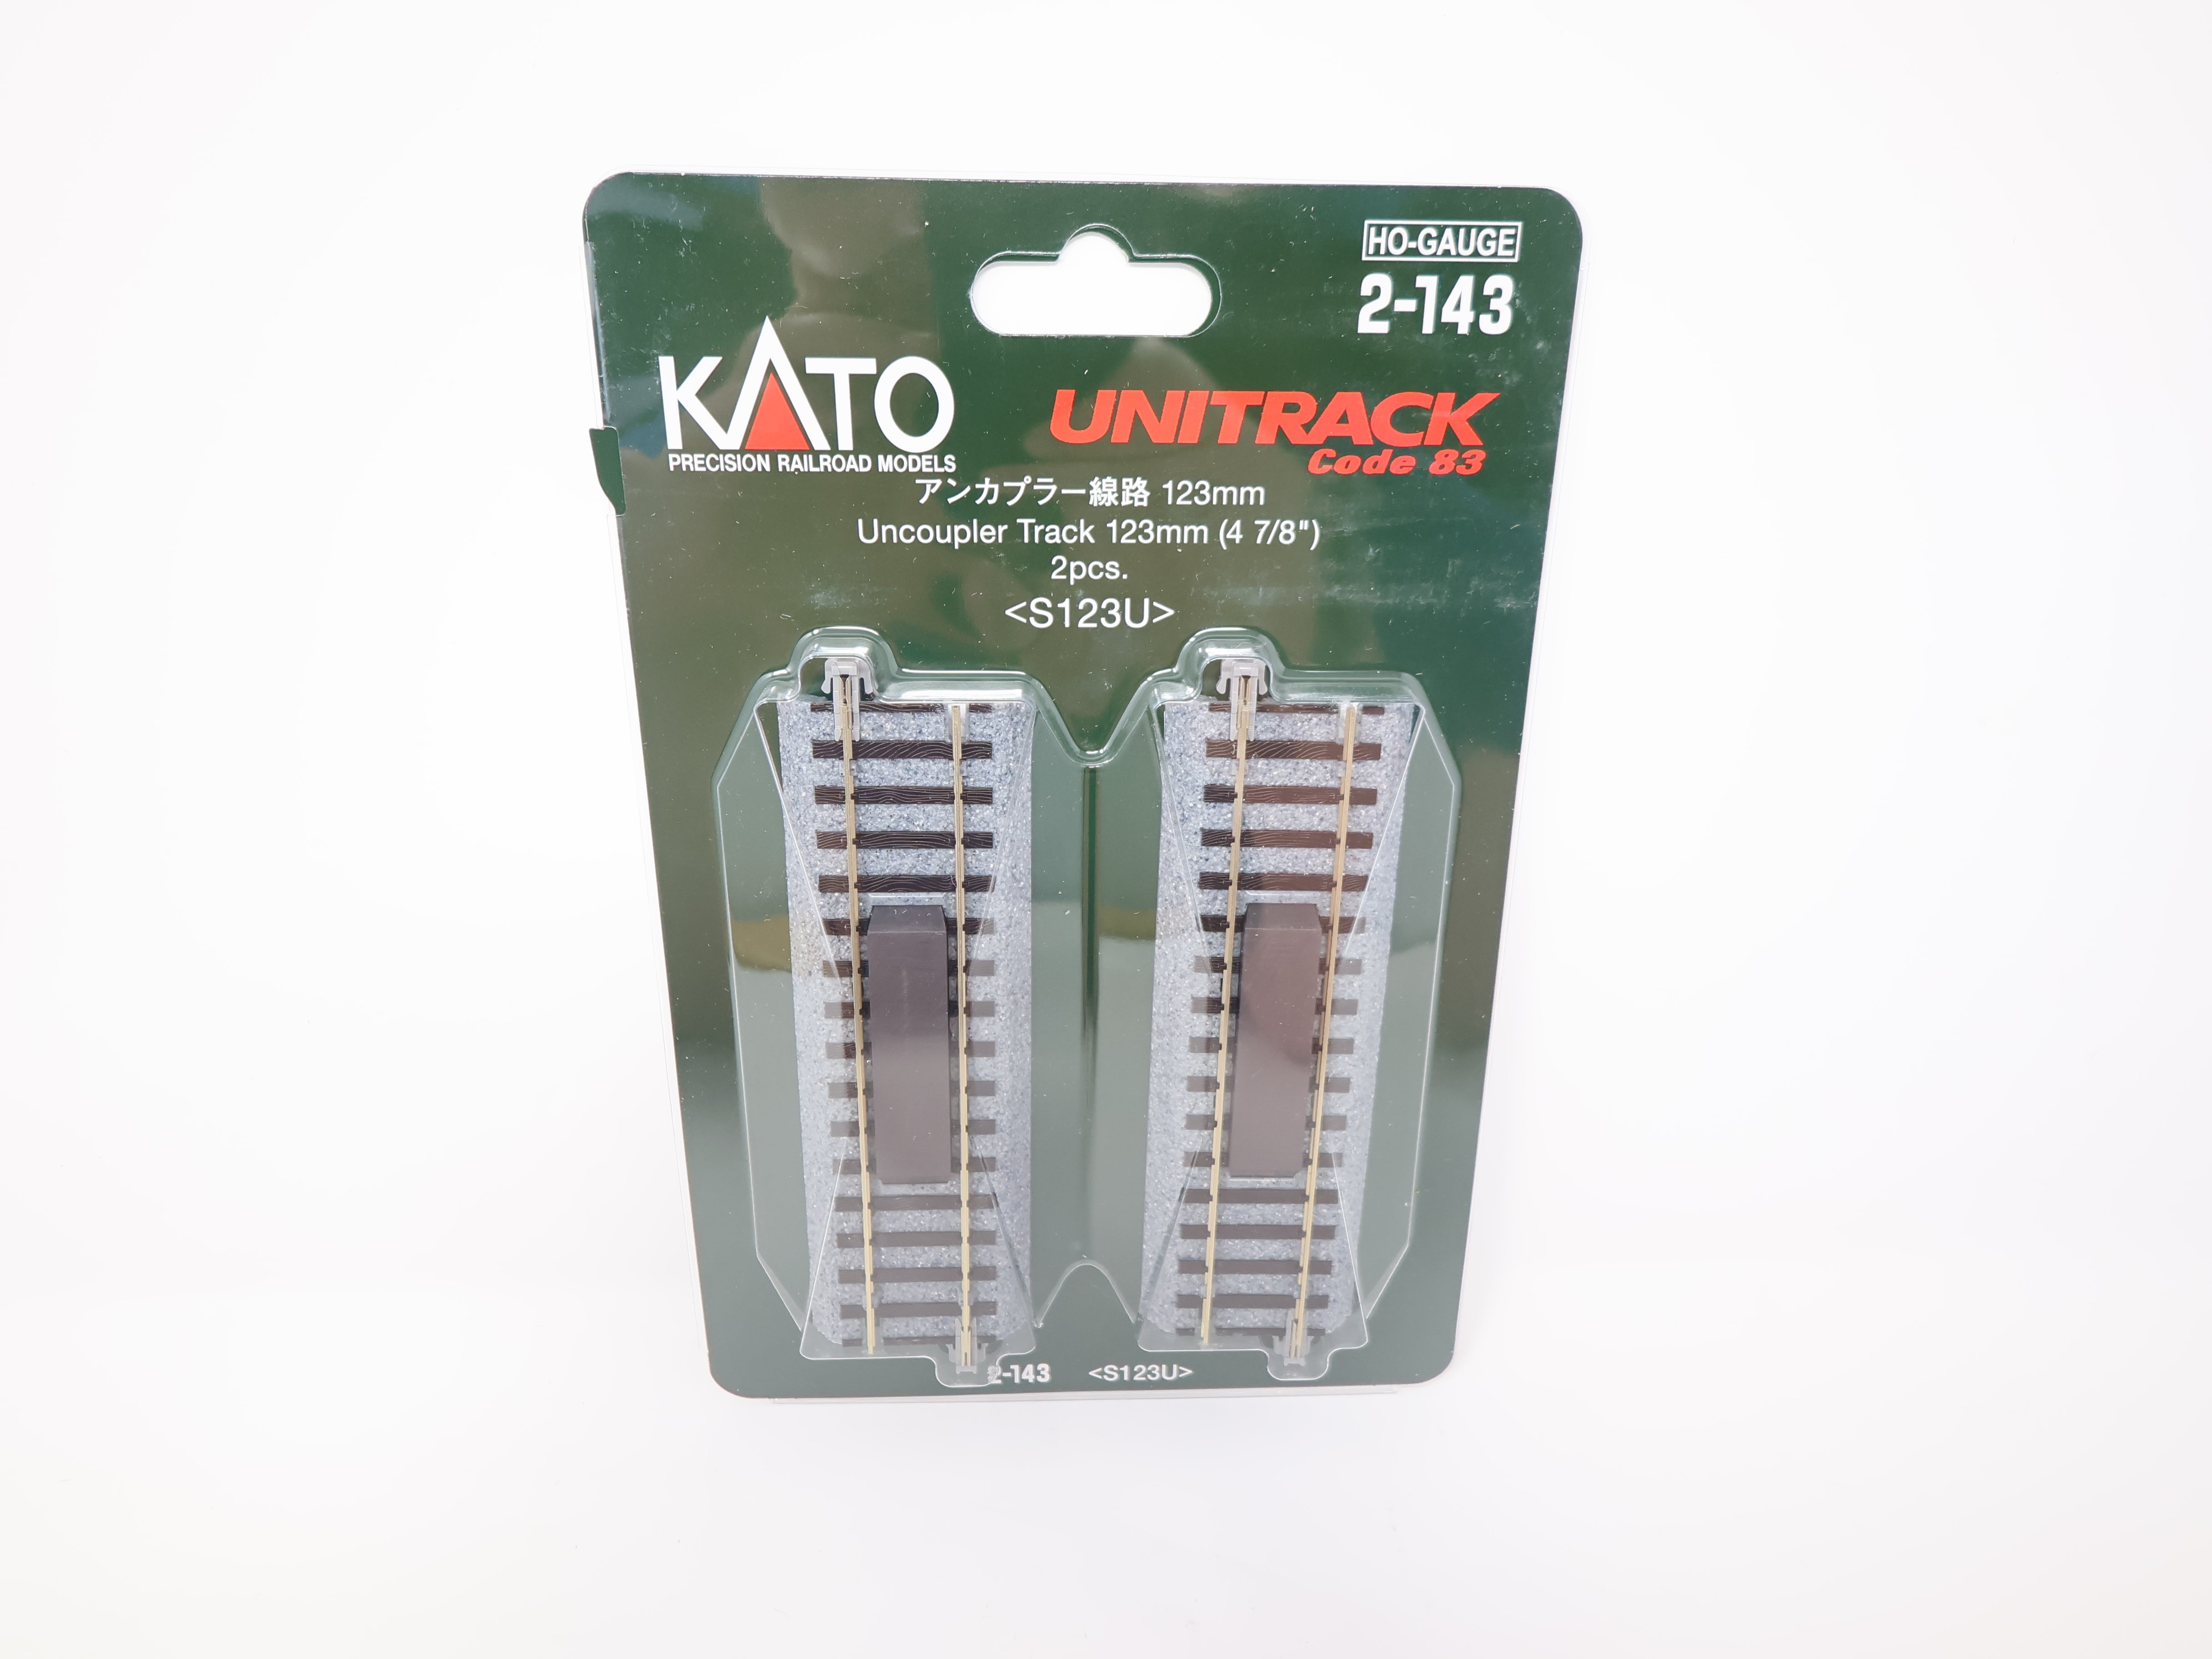 KATO 2-143 HO Scale, Unitrack 4 7/8" Uncoupler Track (2 pcs), Code 83